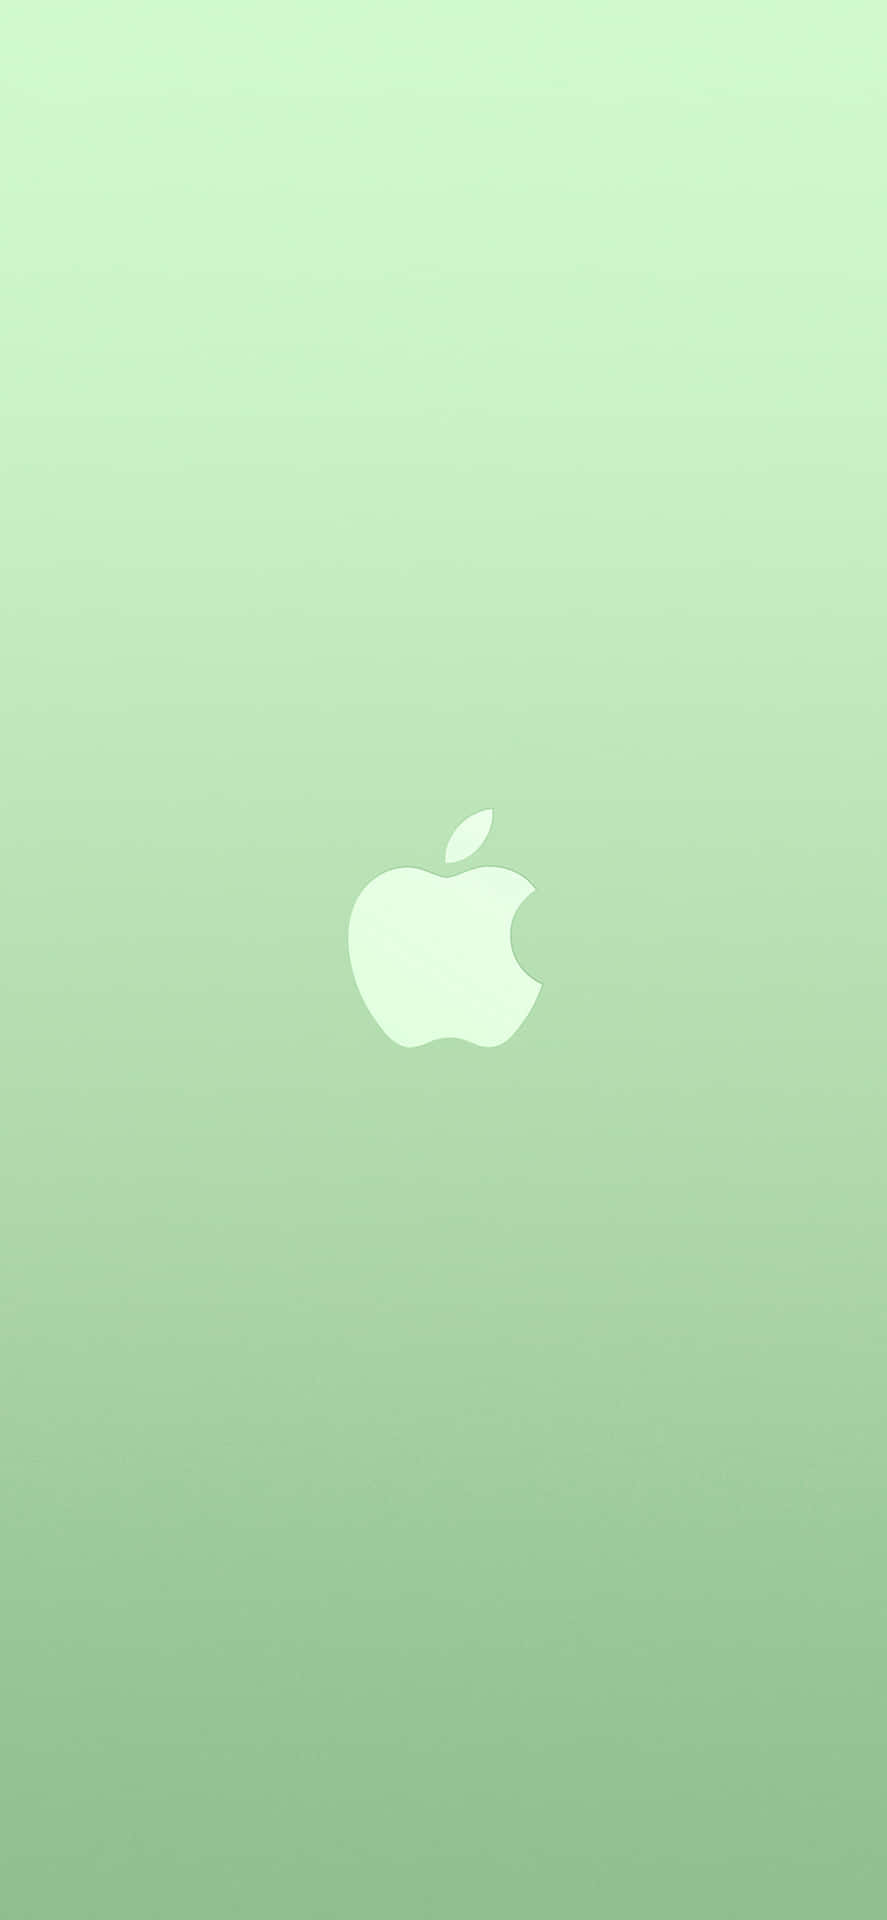 Iphone11 Apple-logo Grön Bakgrund. Wallpaper